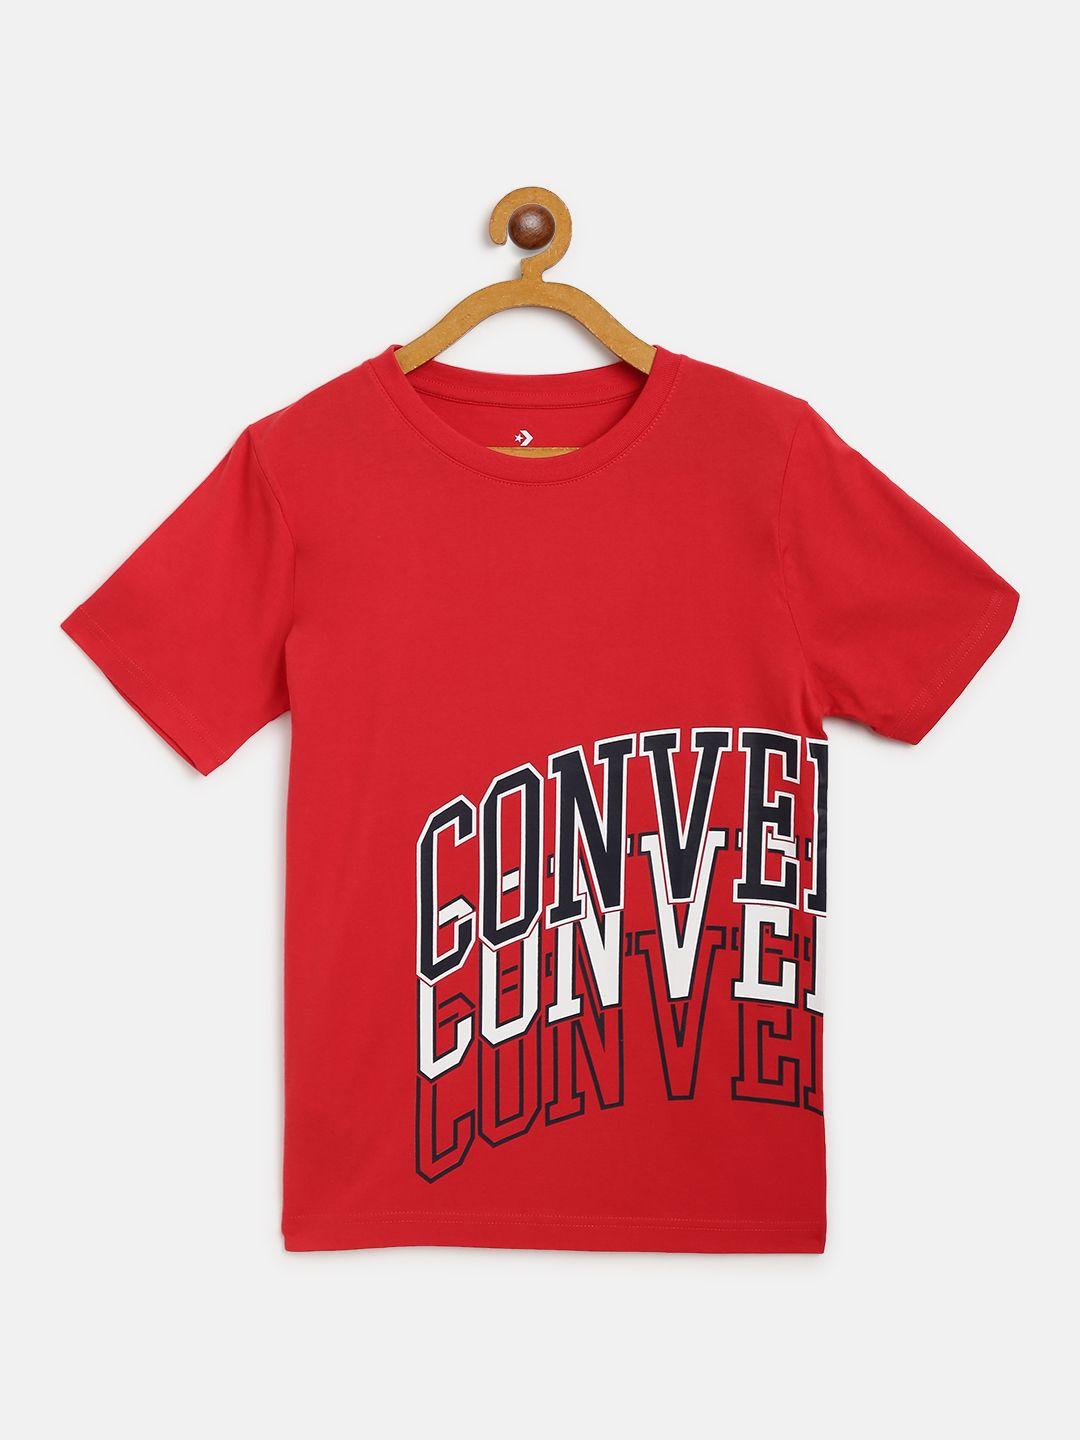 Converse Boys Red & Navy Brand Logo Print Round Neck T-shirt